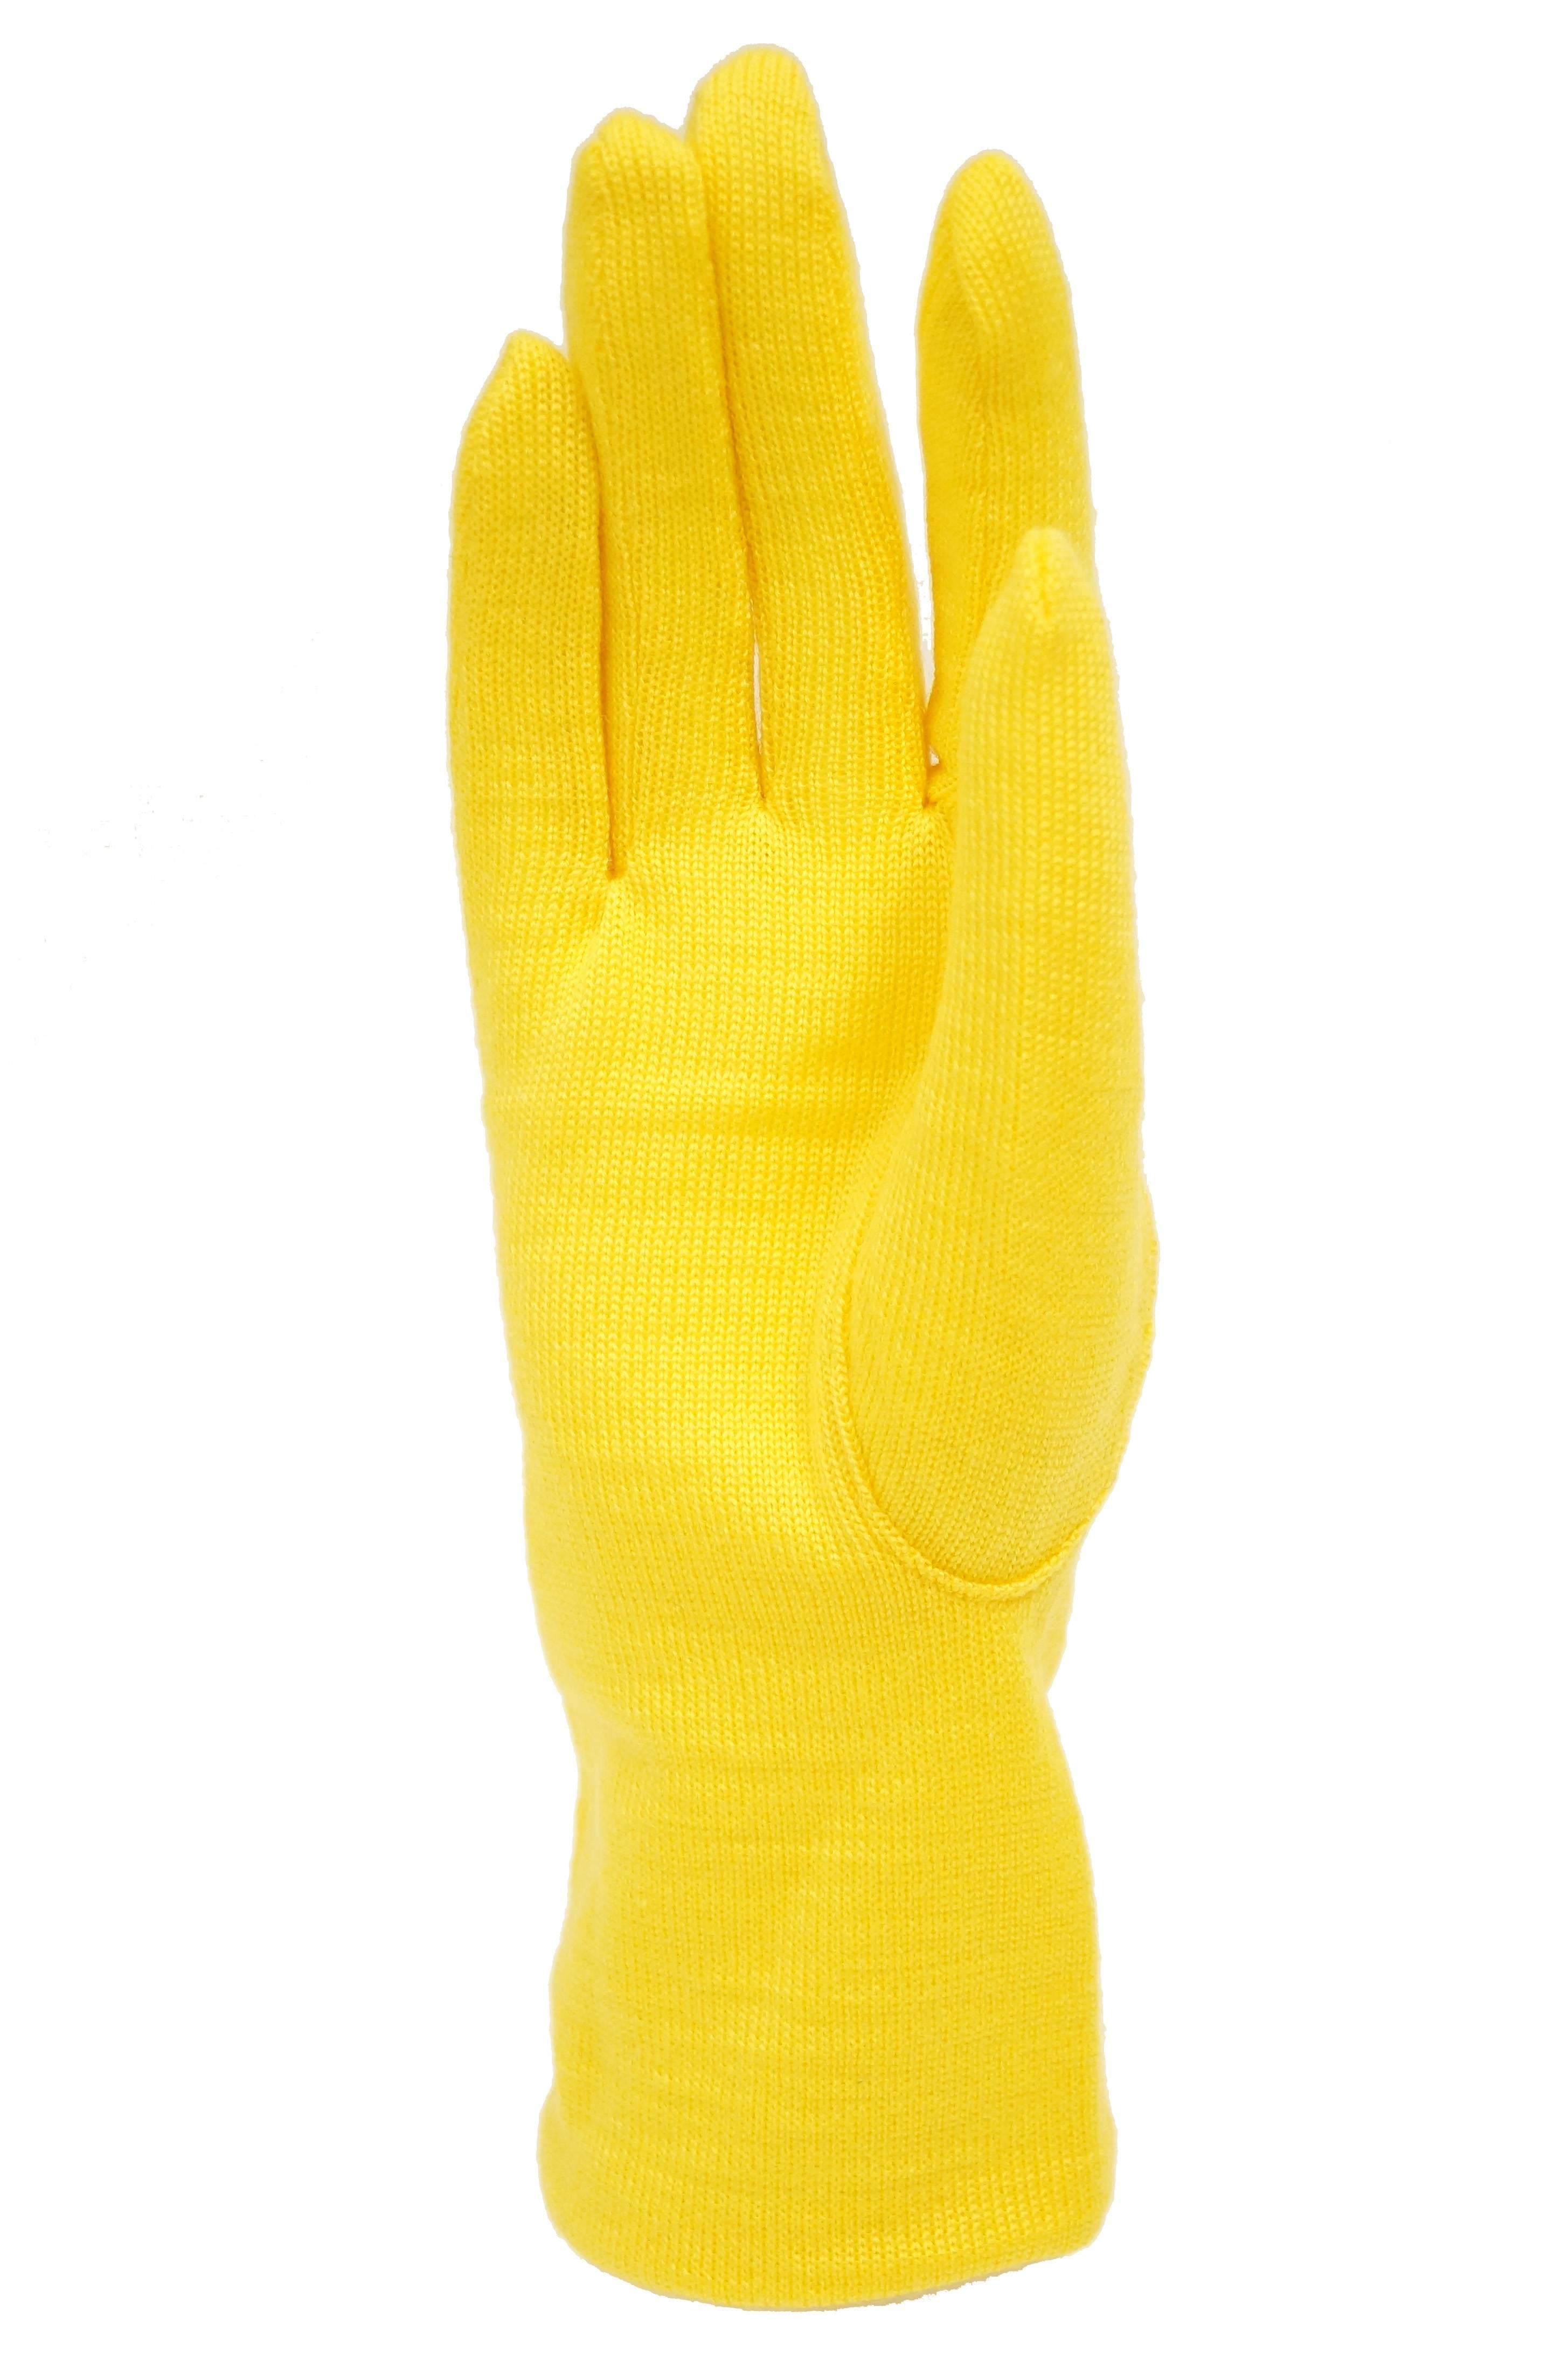 1980s gloves